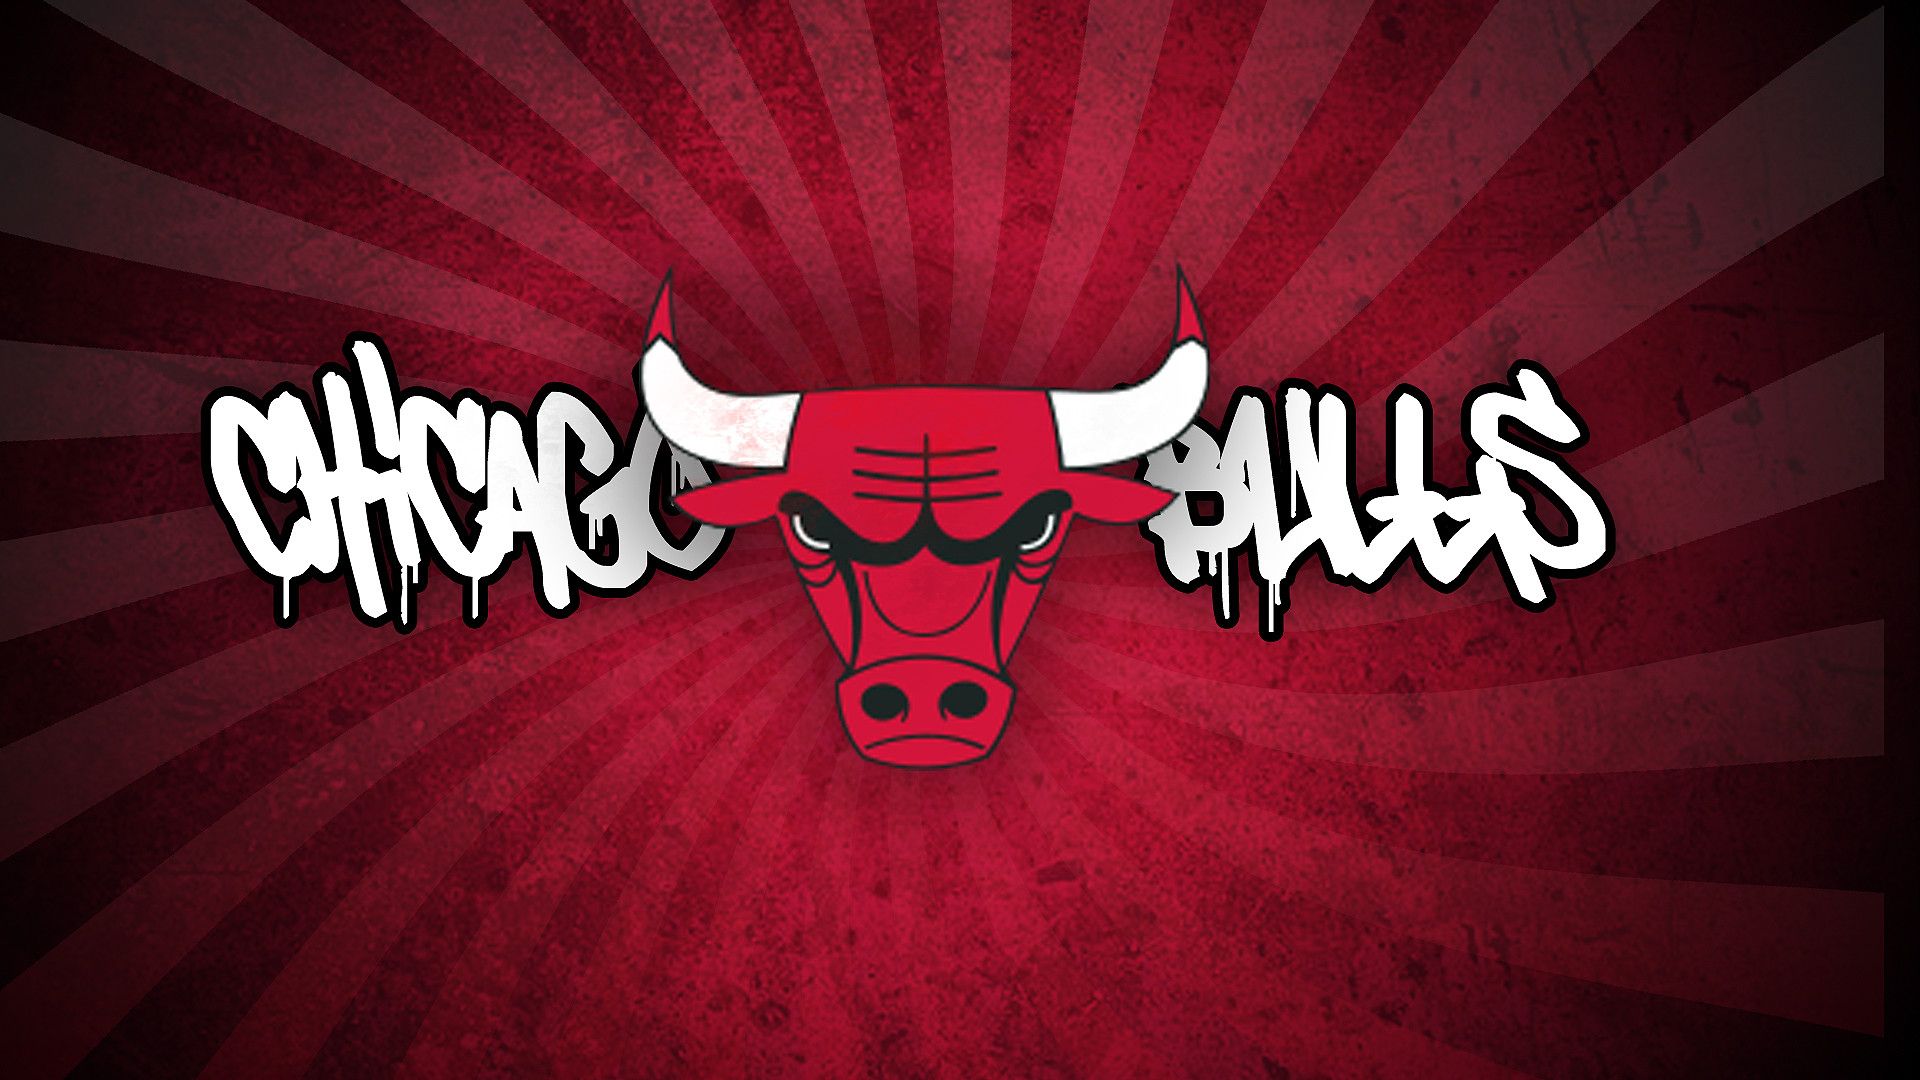 Chicago Bulls Logo Wallpapers HD | PixelsTalk Net